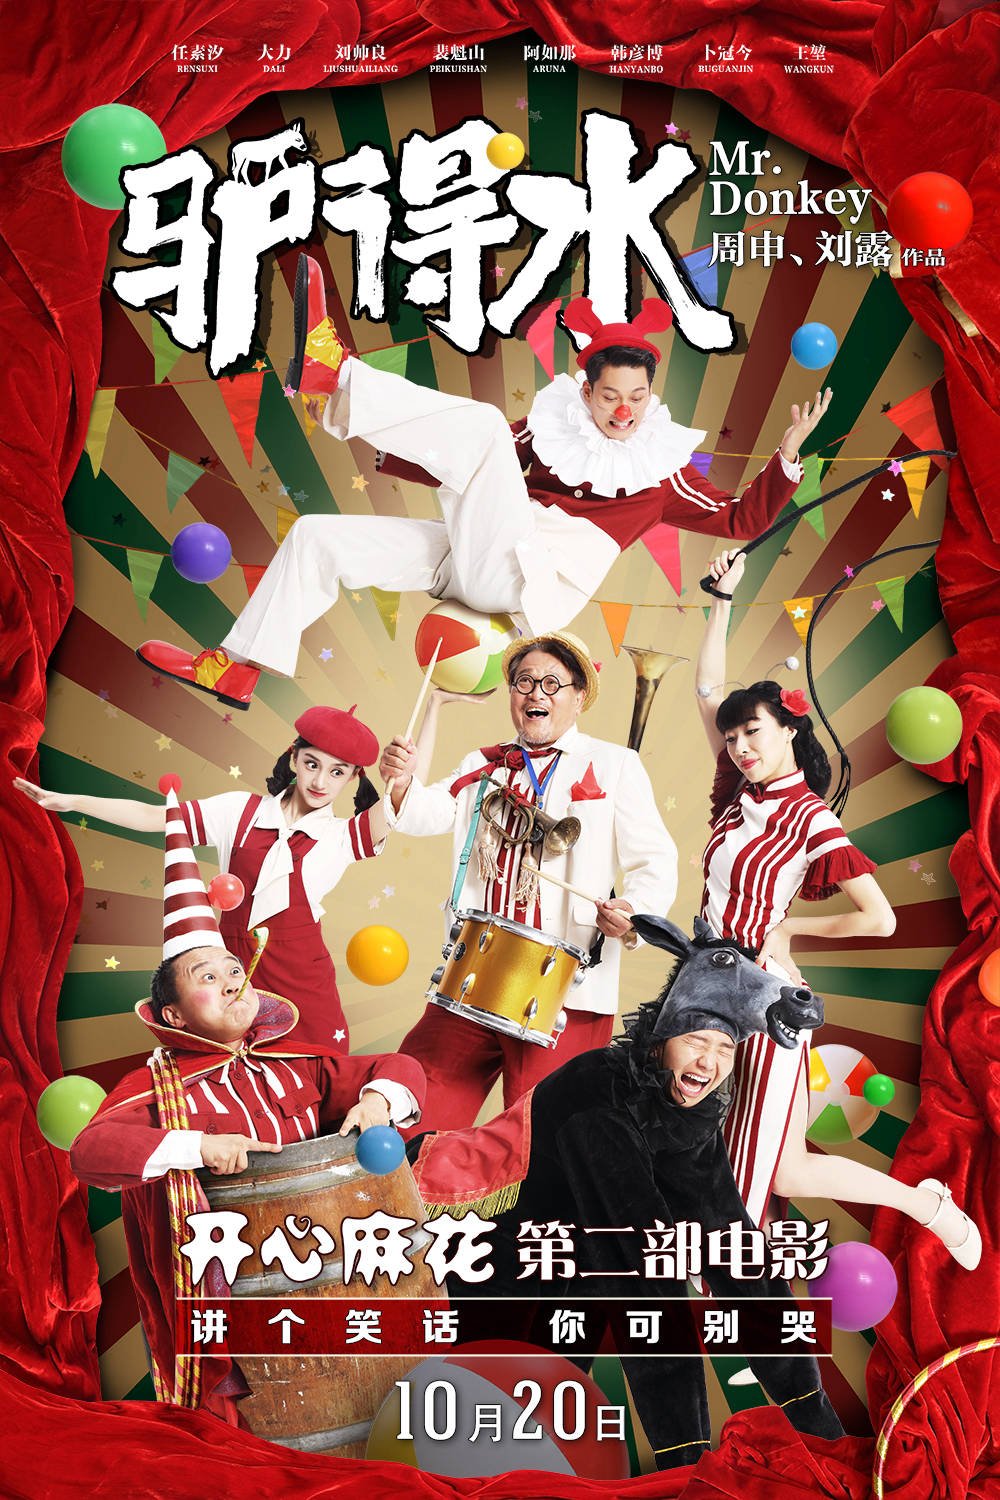 Mandarin poster of the movie Mr. Donkey